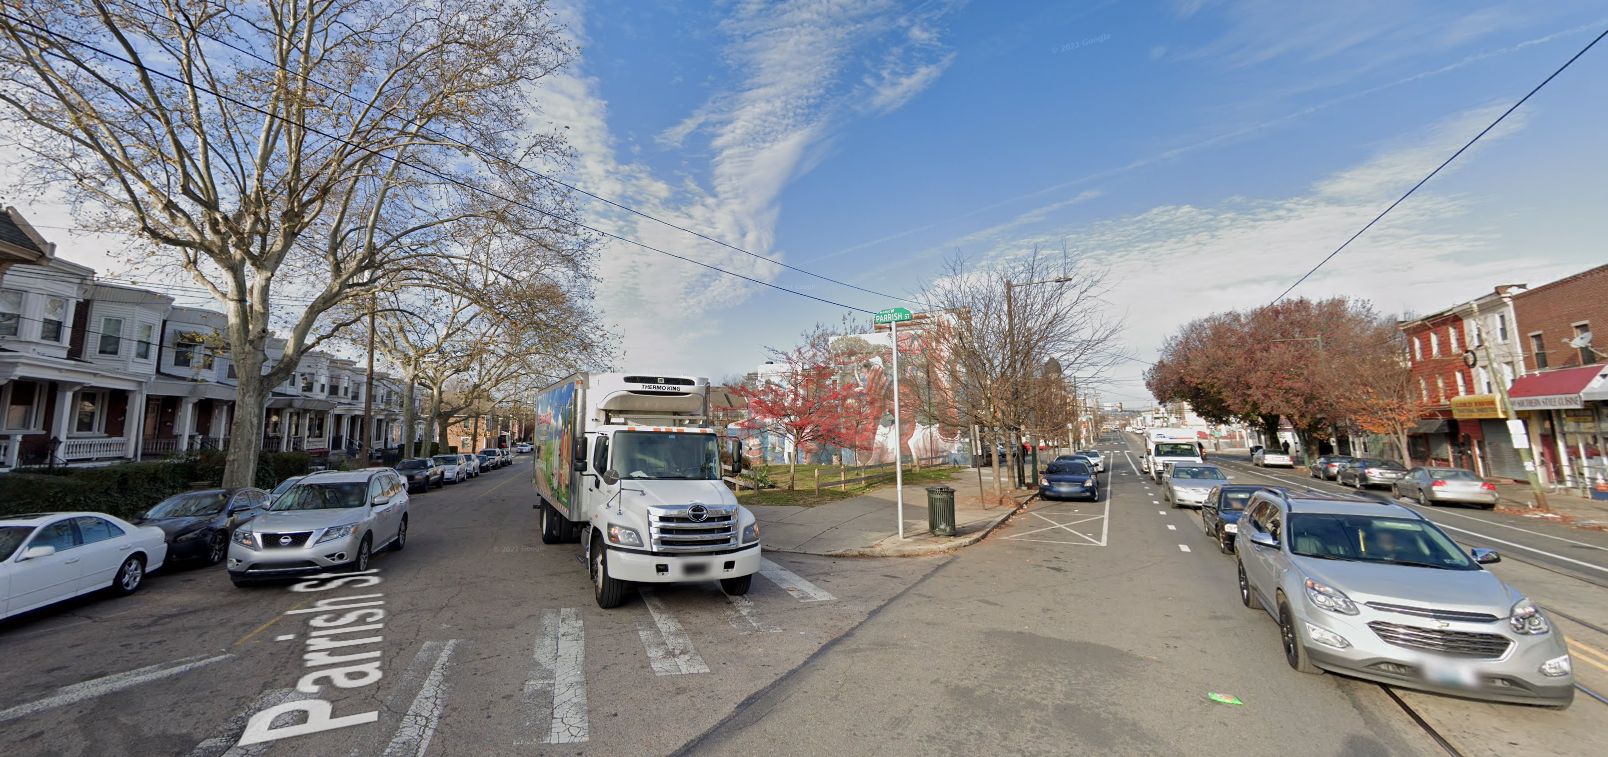 4328 Lancaster Avenue prior to redevelopment. Looking northwest. November 2020. Credit: Google Maps